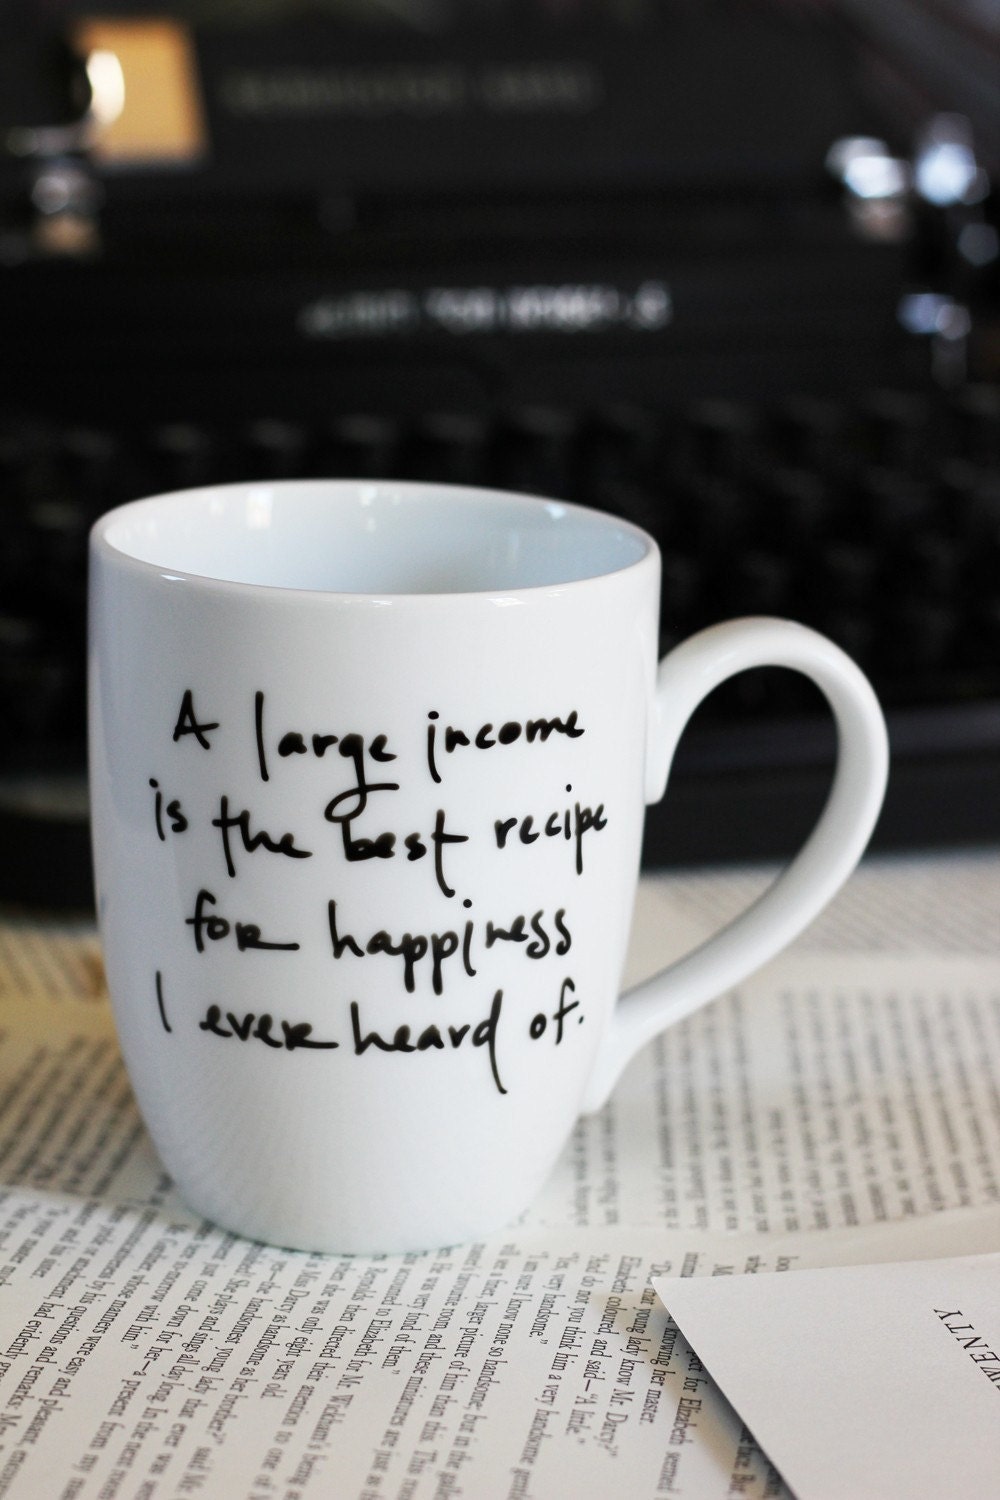 A Large Income- Jane Austen quote mug